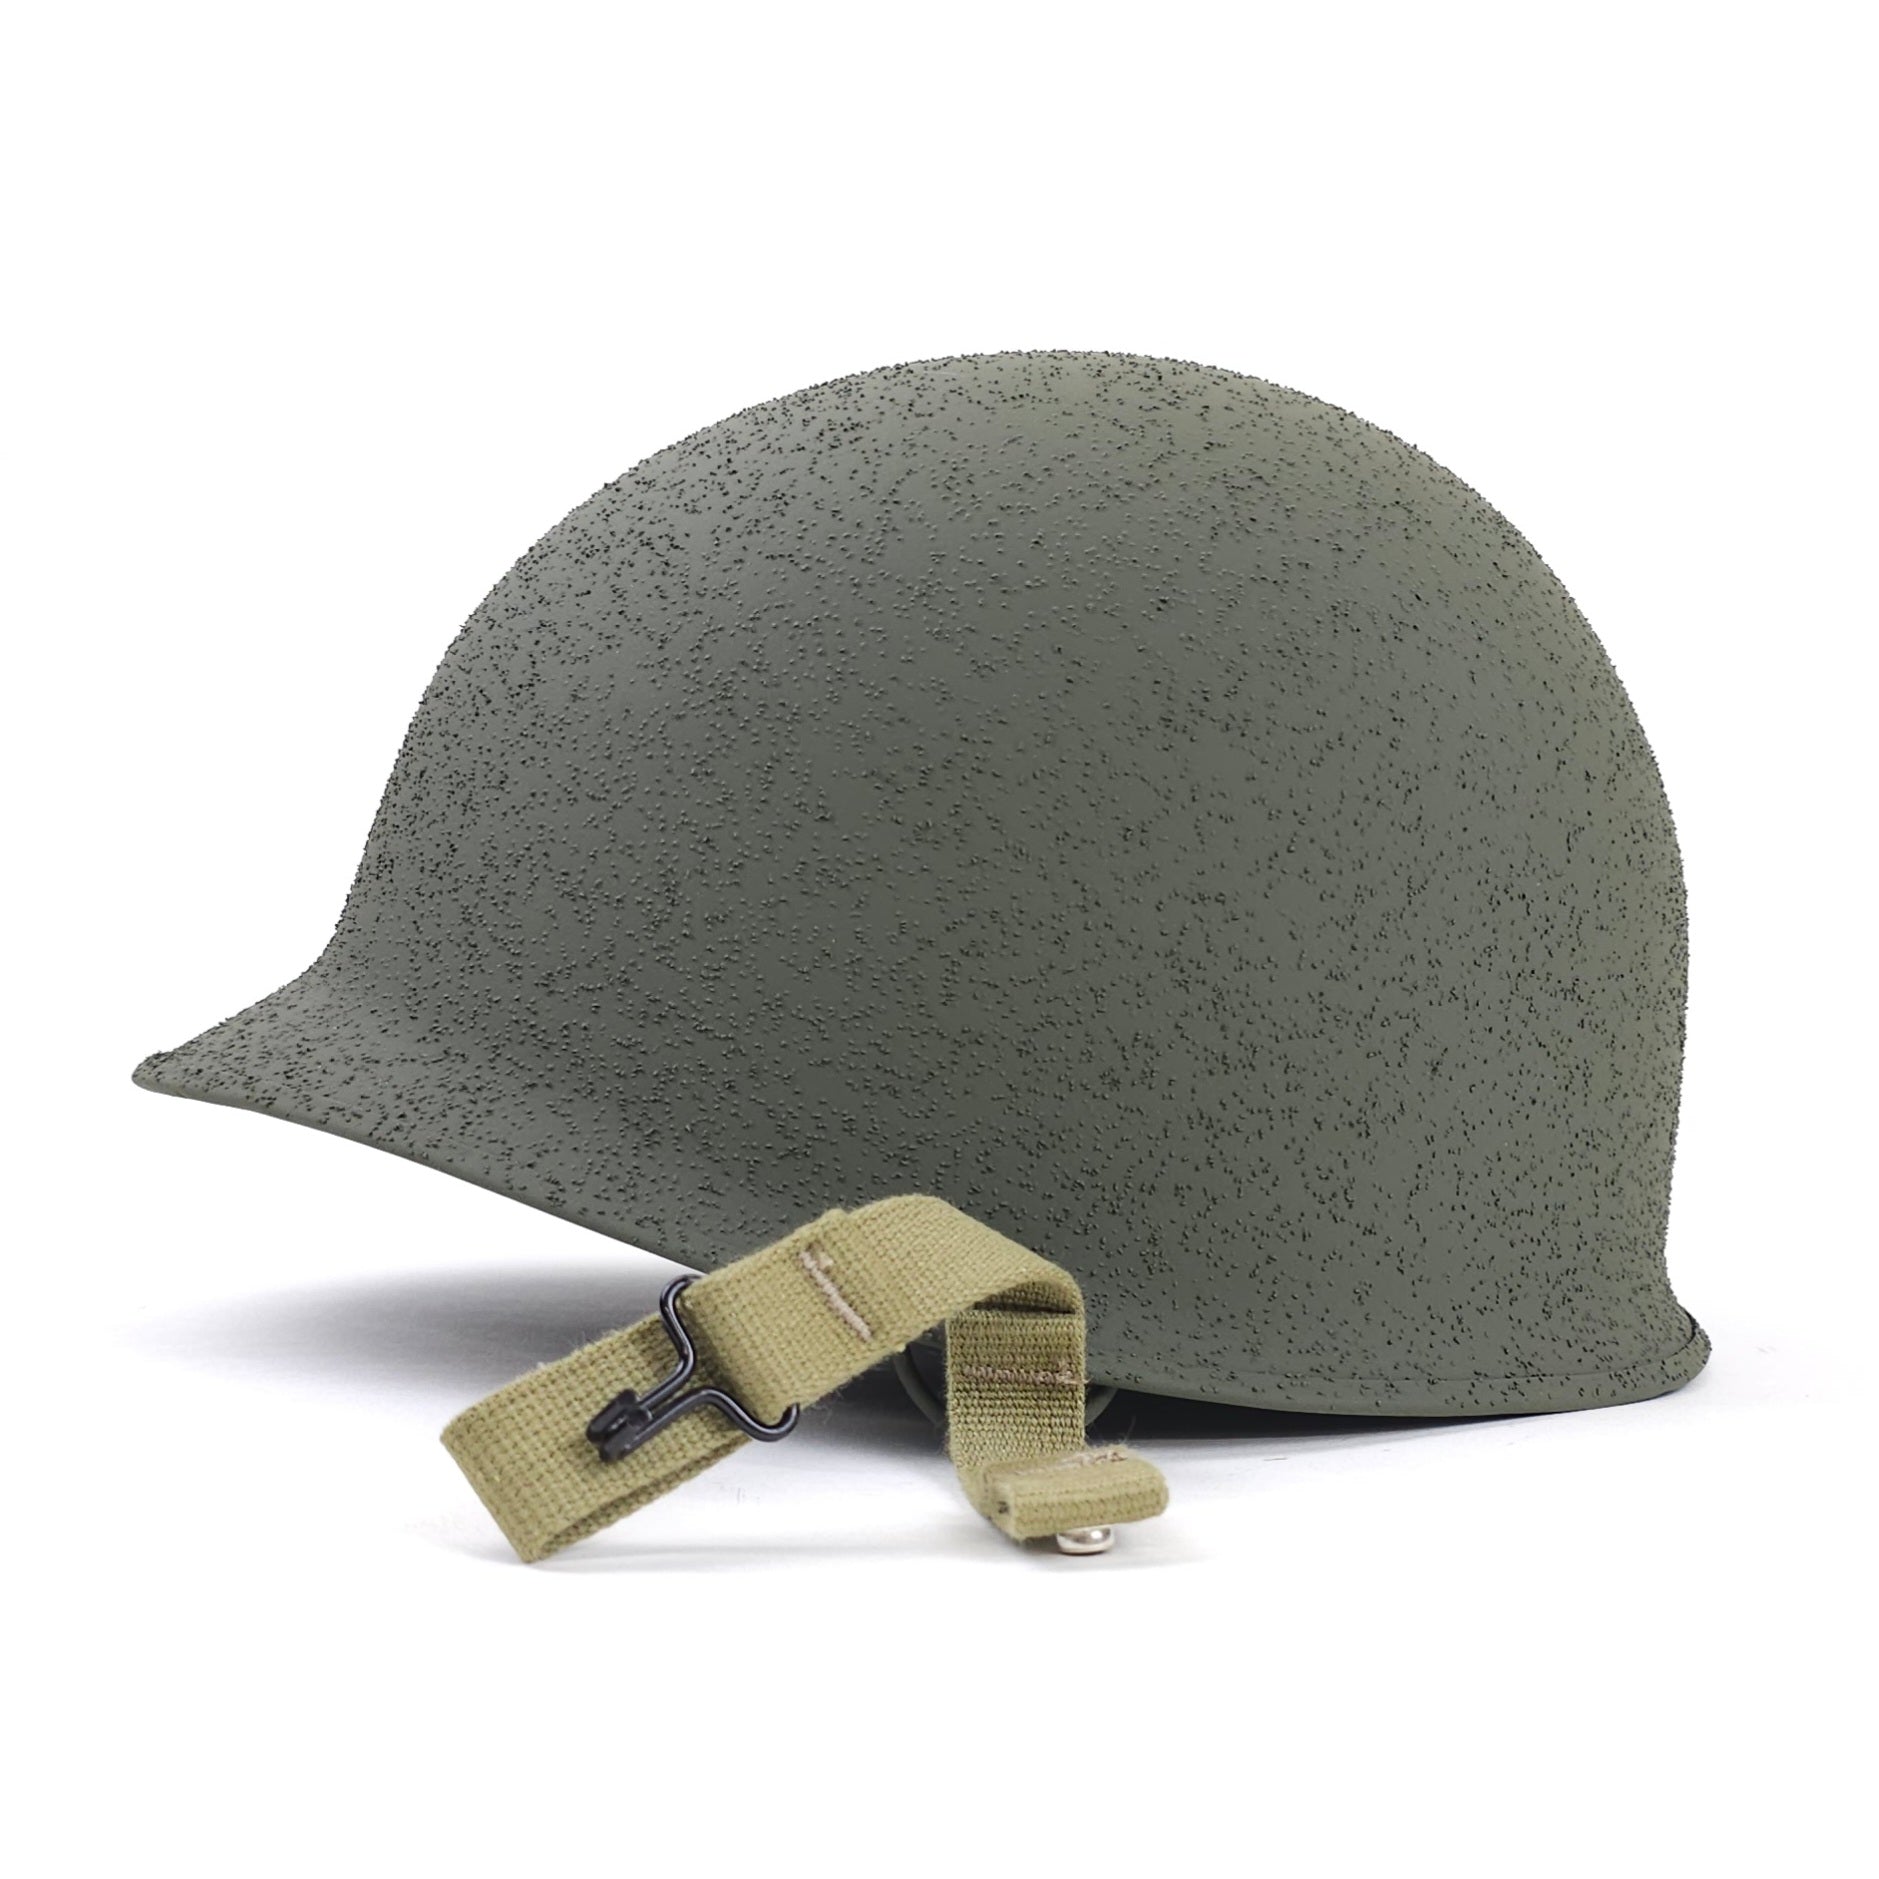 Euro Clone - M2 Paratrooper Helmet - Helmet Only